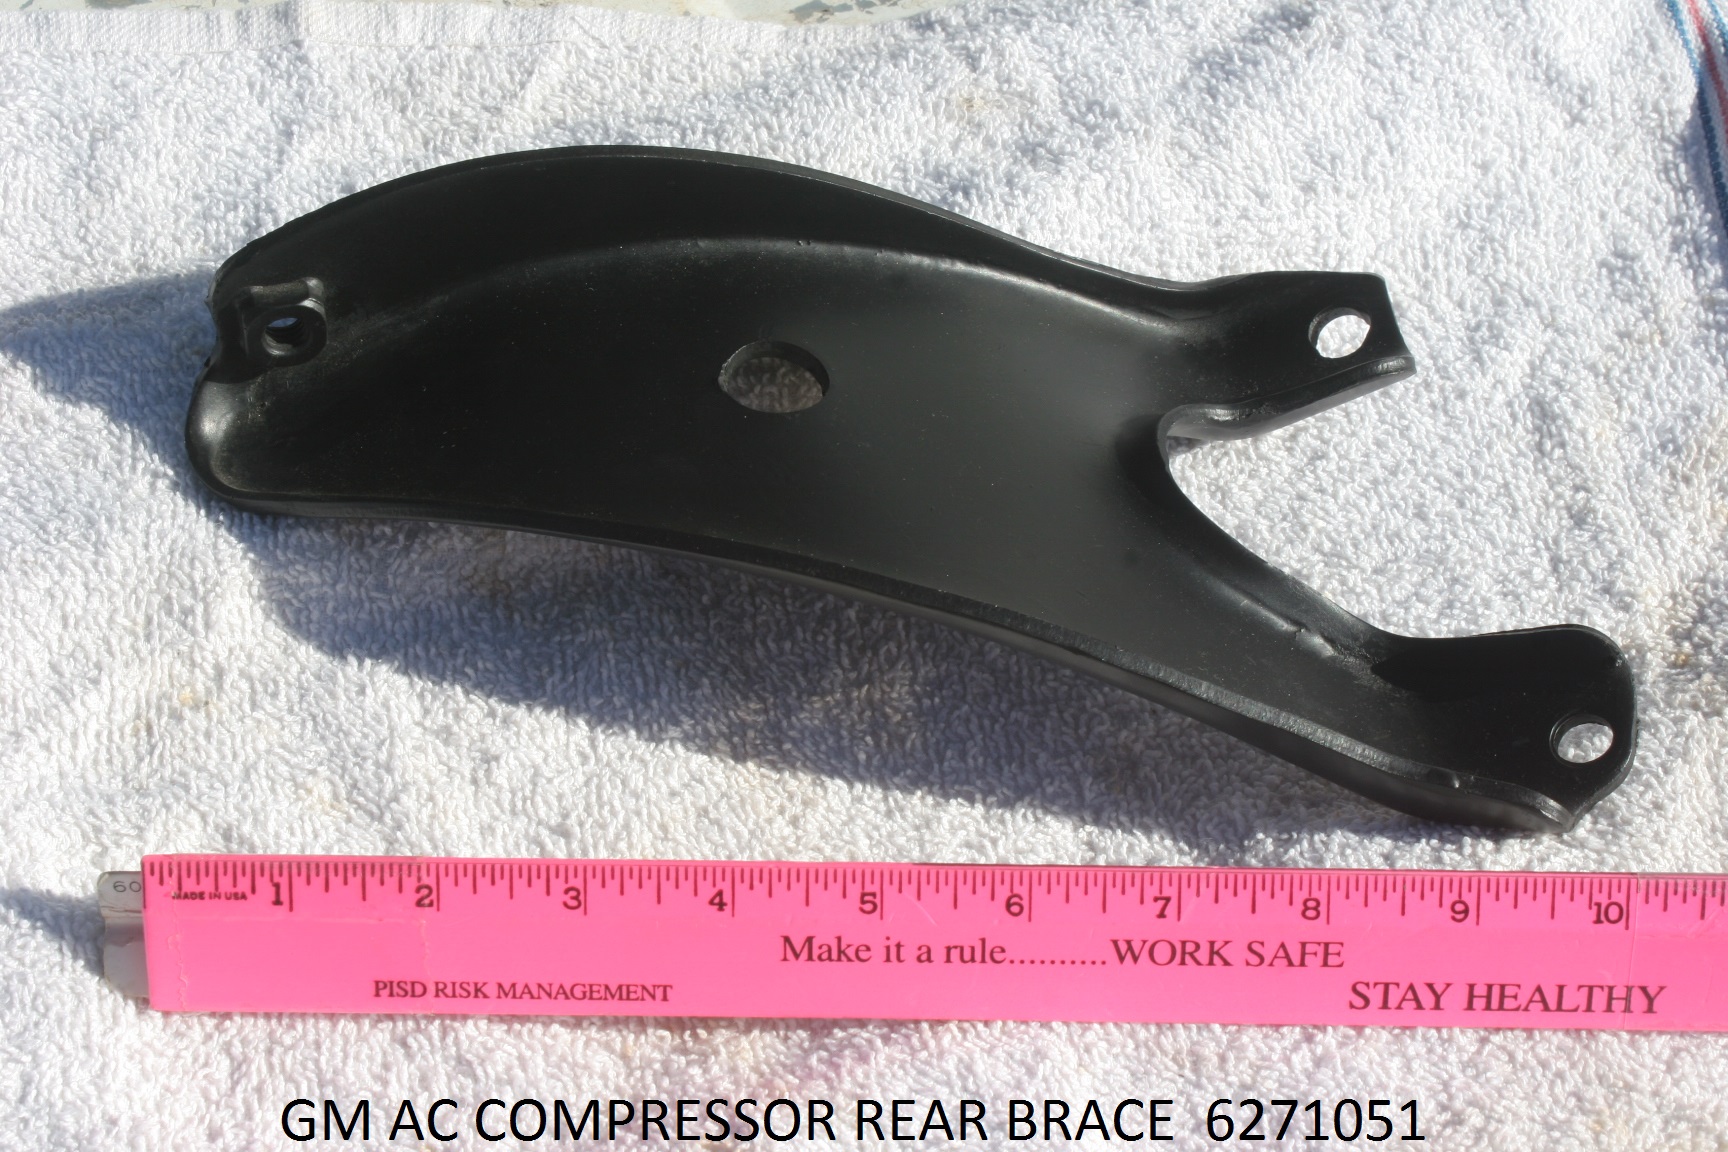 6271051, Compressor rear brace GM part